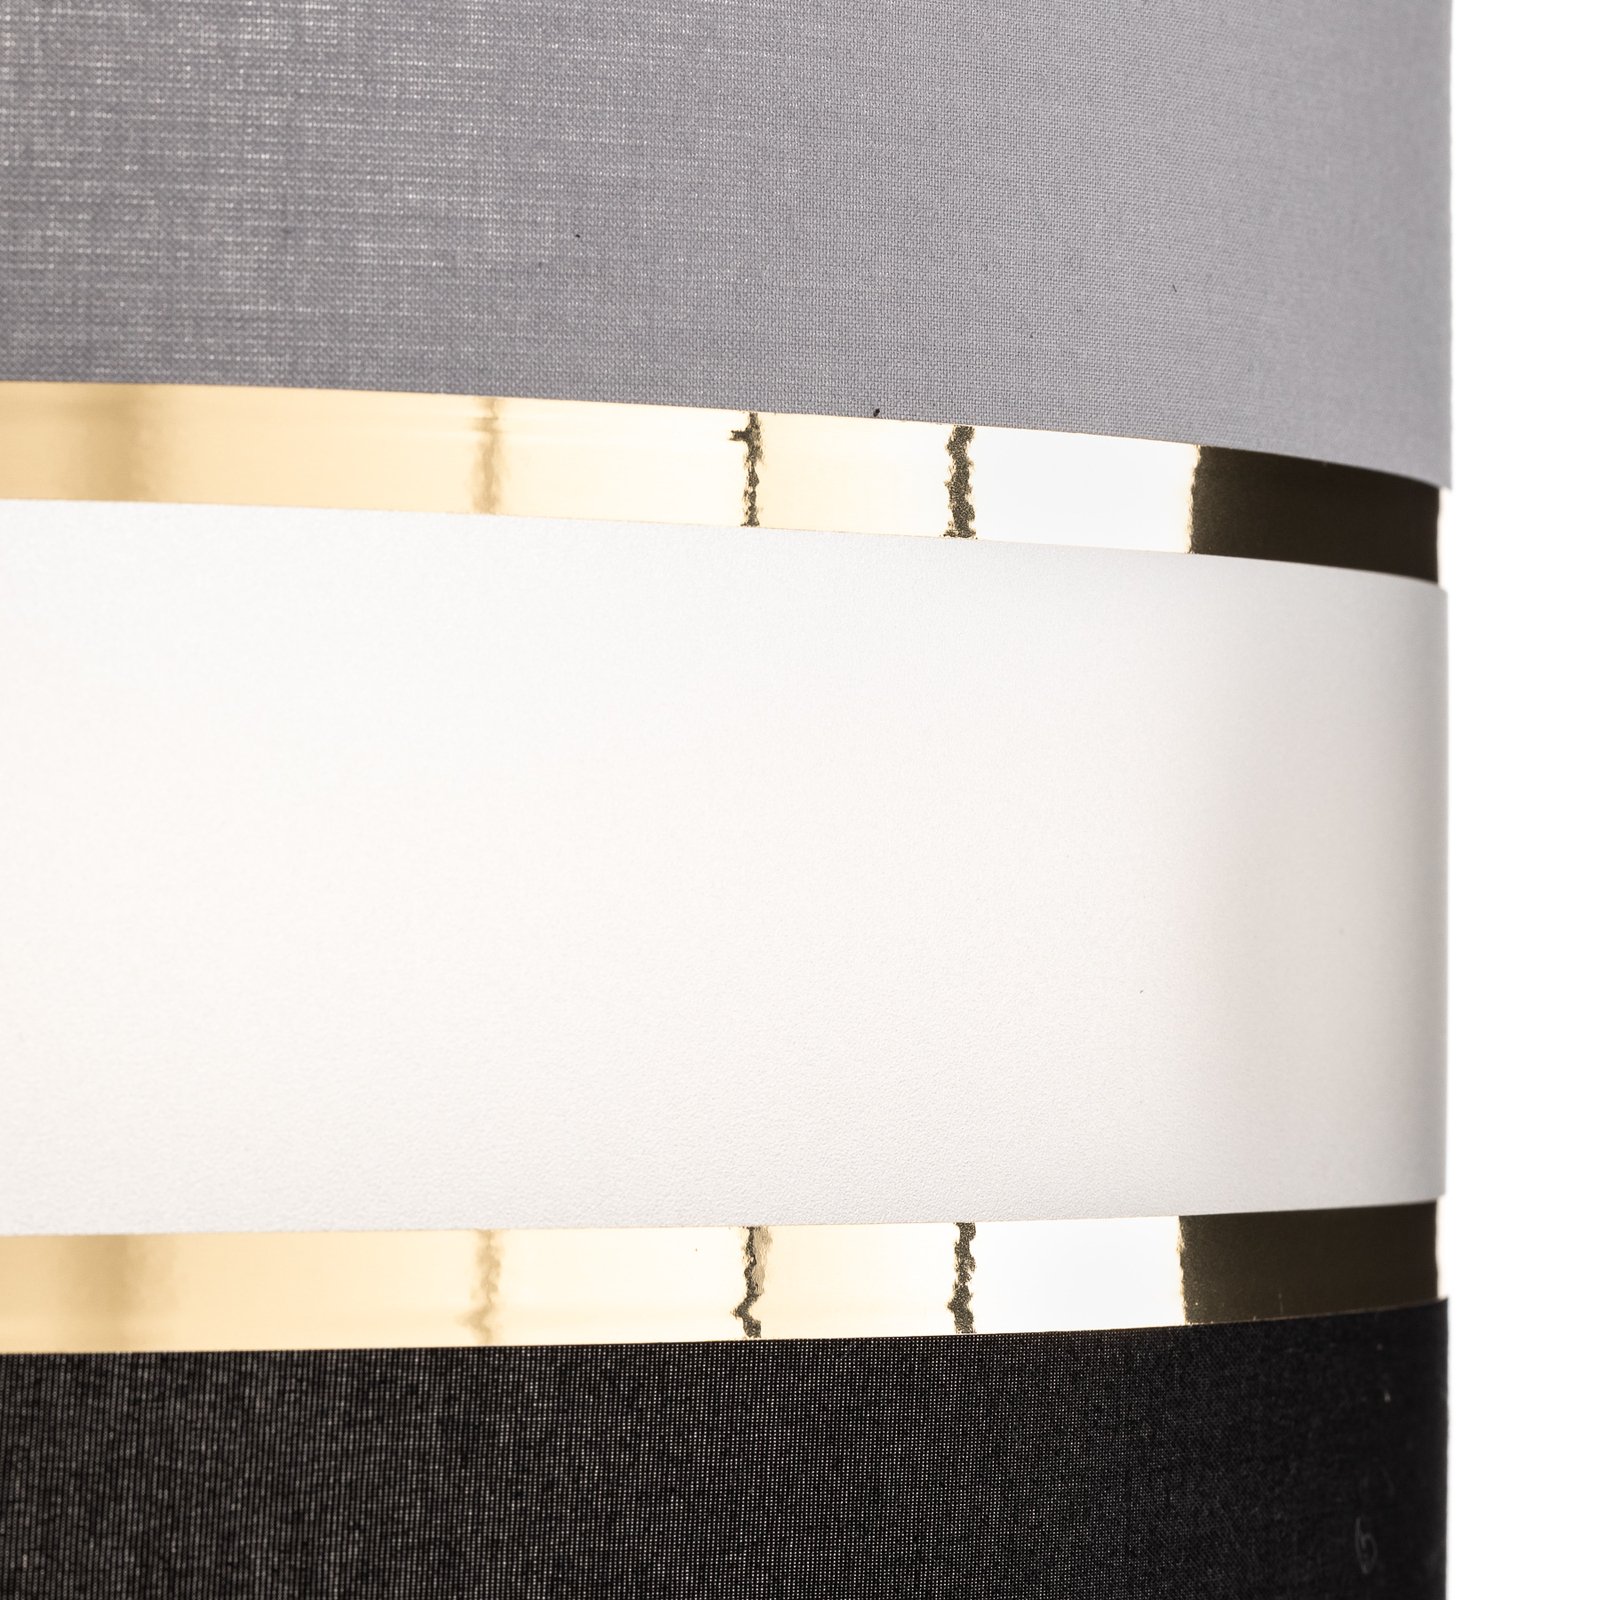 Hanglamp Helen textiel grijs-zwart-goud Ø 40 cm